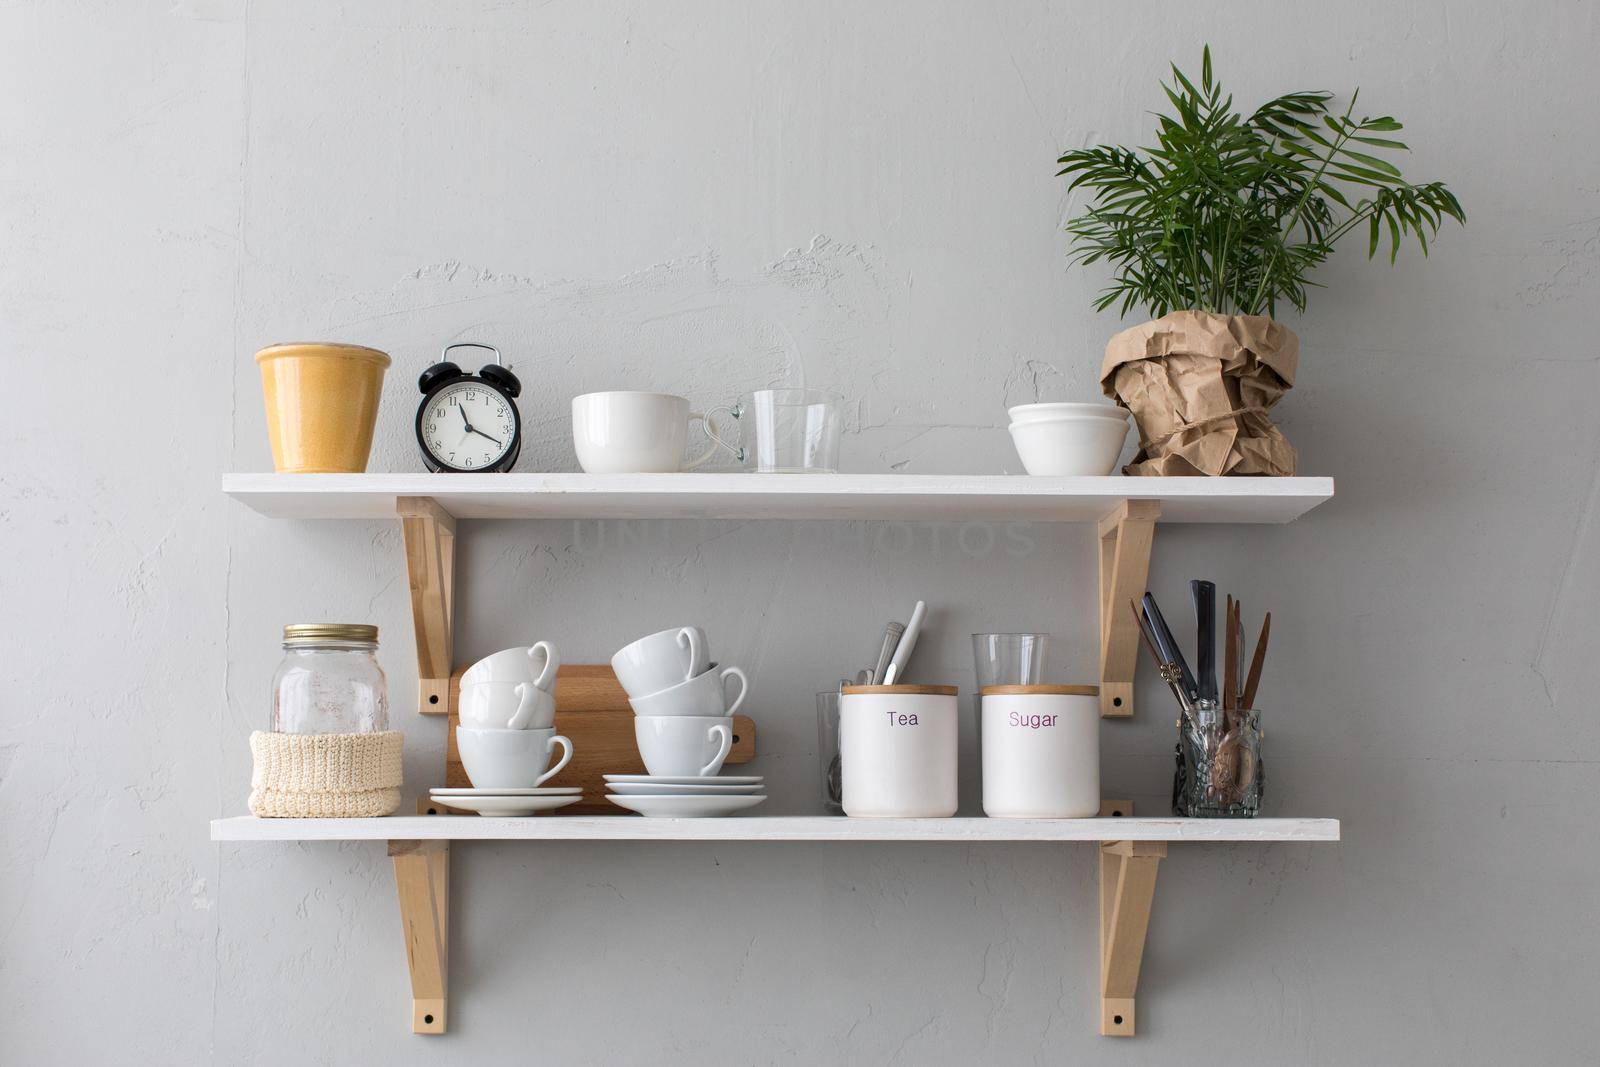 Utensils and mugs on shelf by Demkat